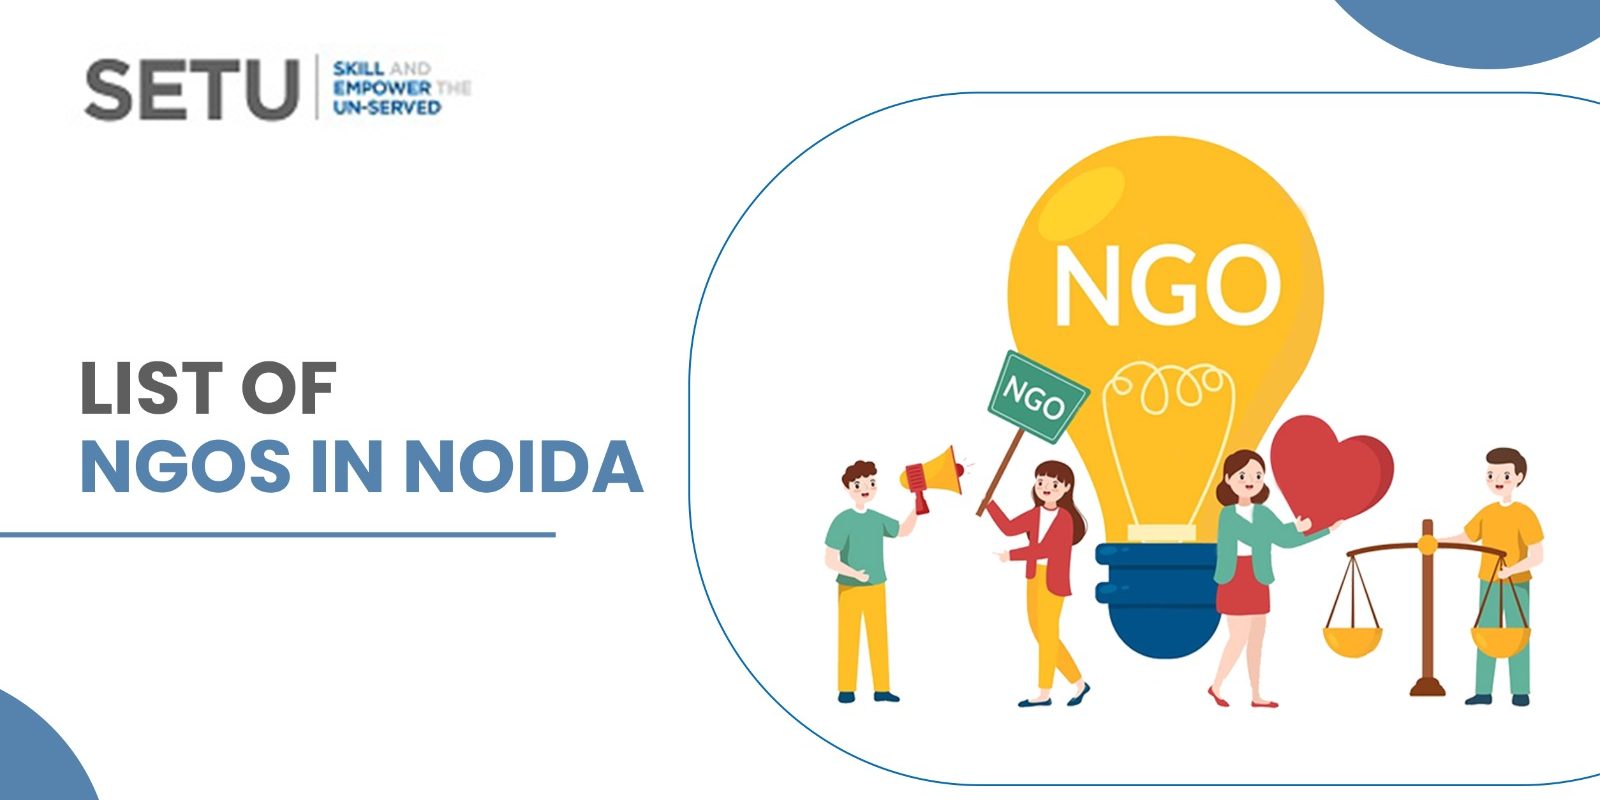 NGOS IN NOIDA